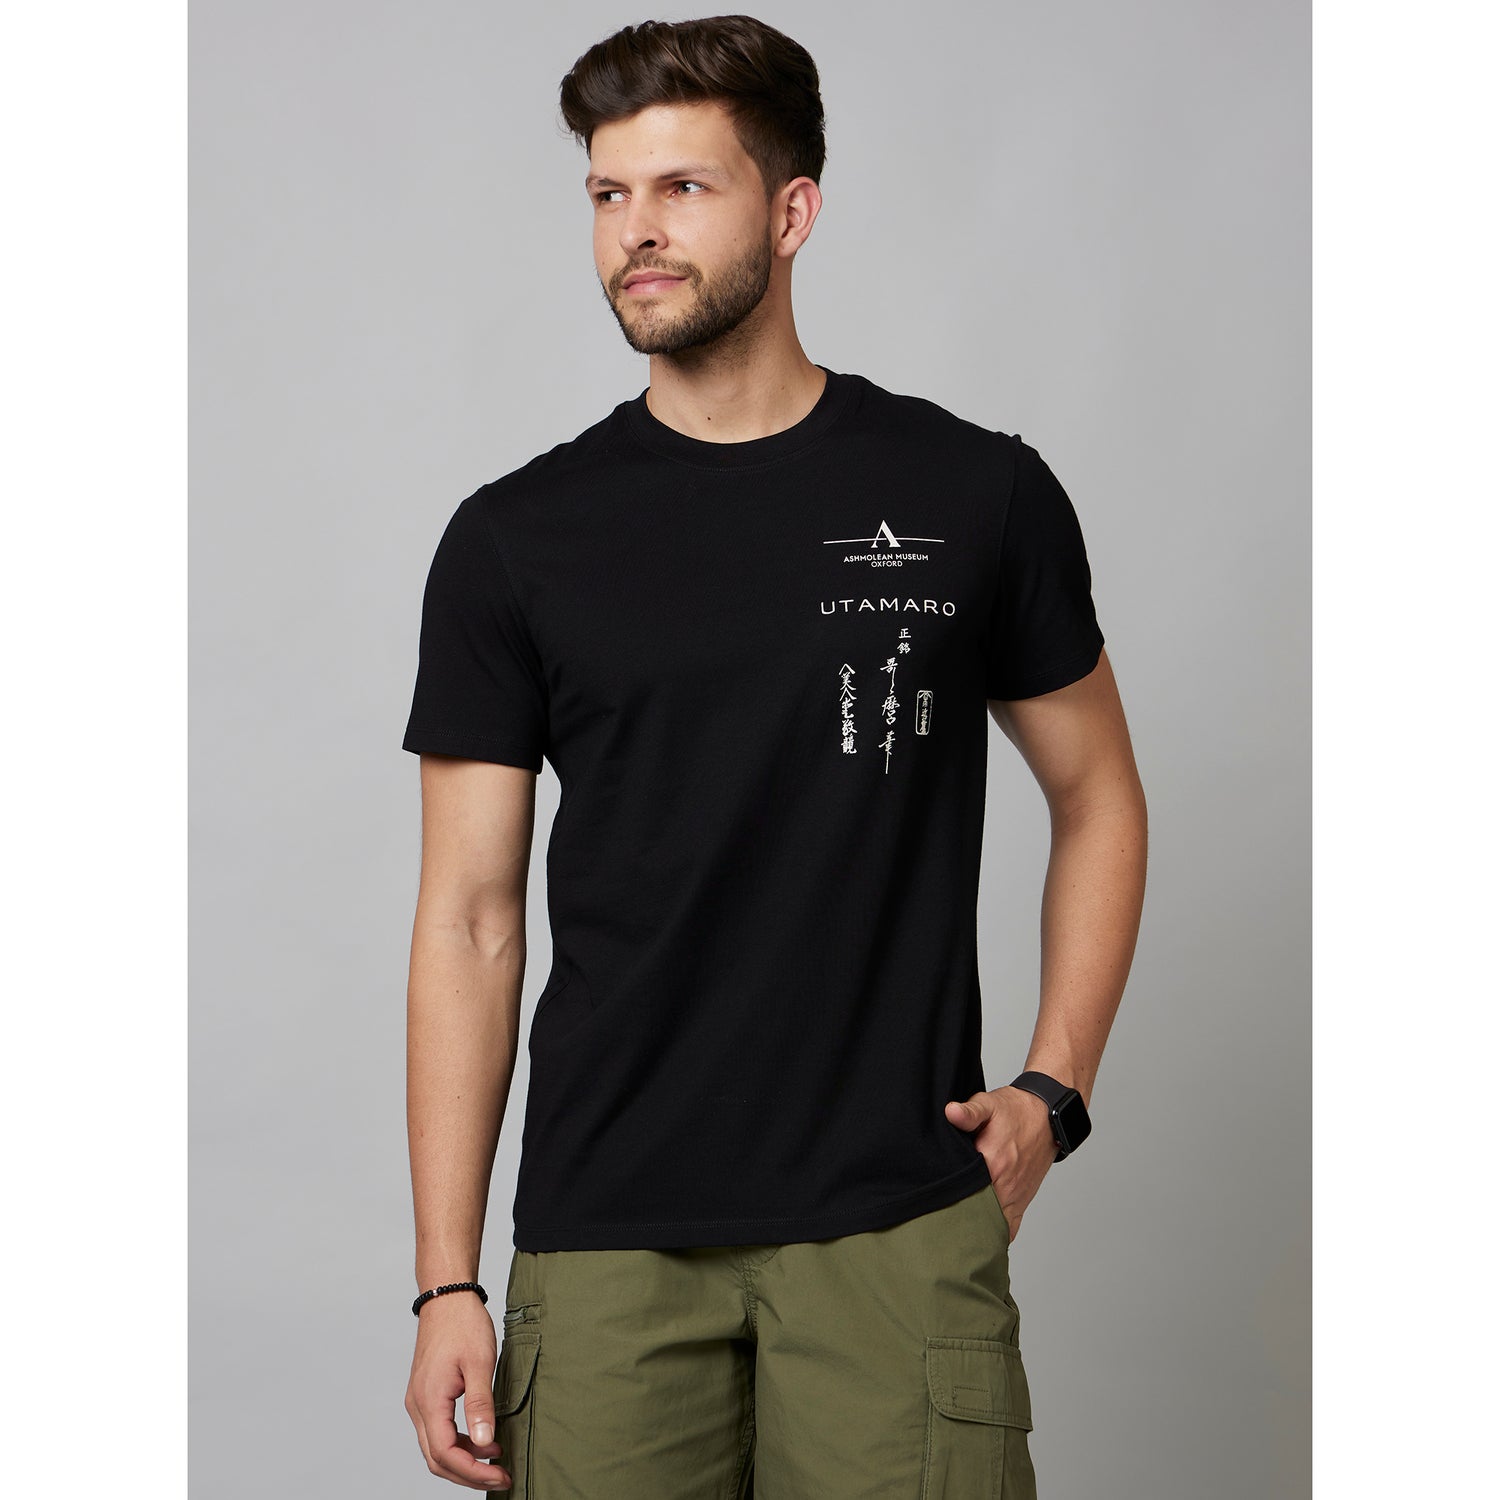 Black Graphic Printed Short Sleeve Cotton T-Shirts (LDEJAPAN)